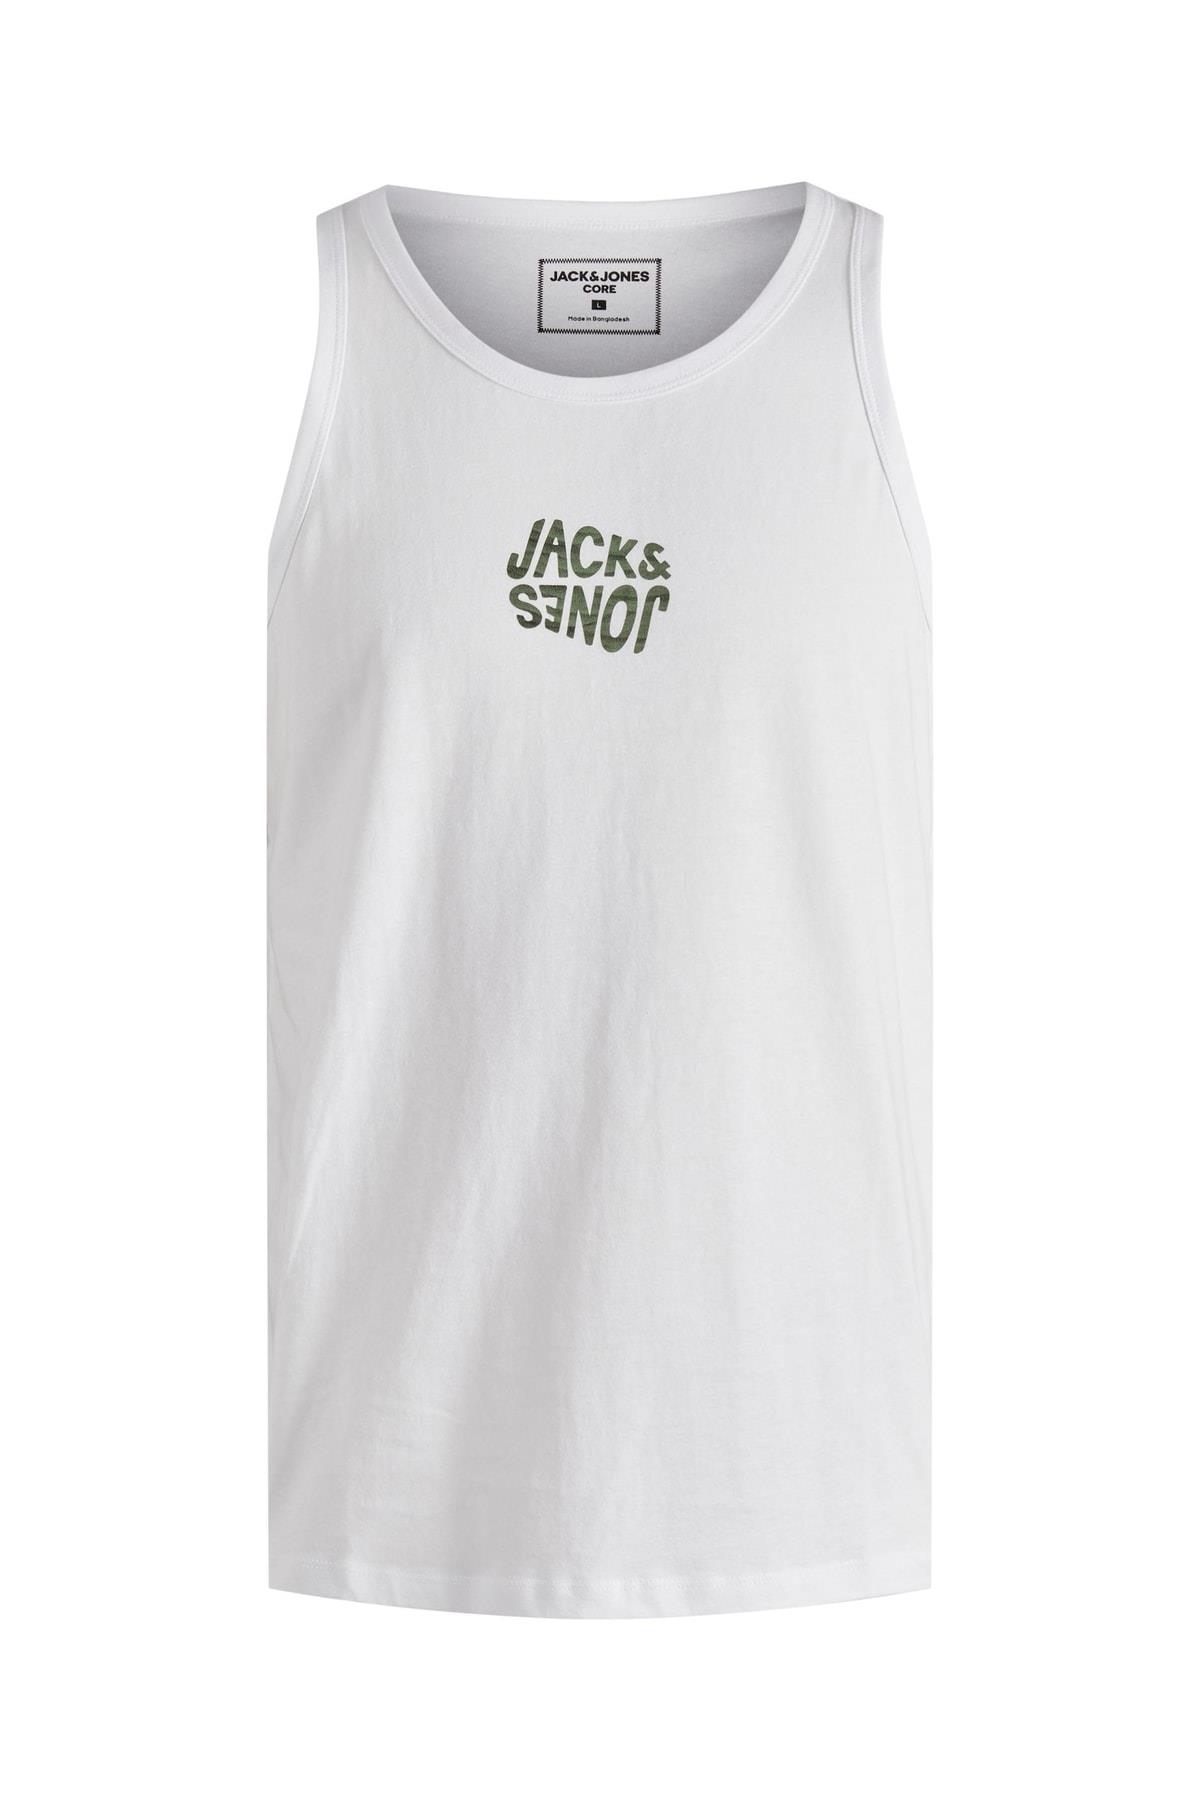 Jack & Jones Surf Tank Top Erkek Atlet 12210480-01